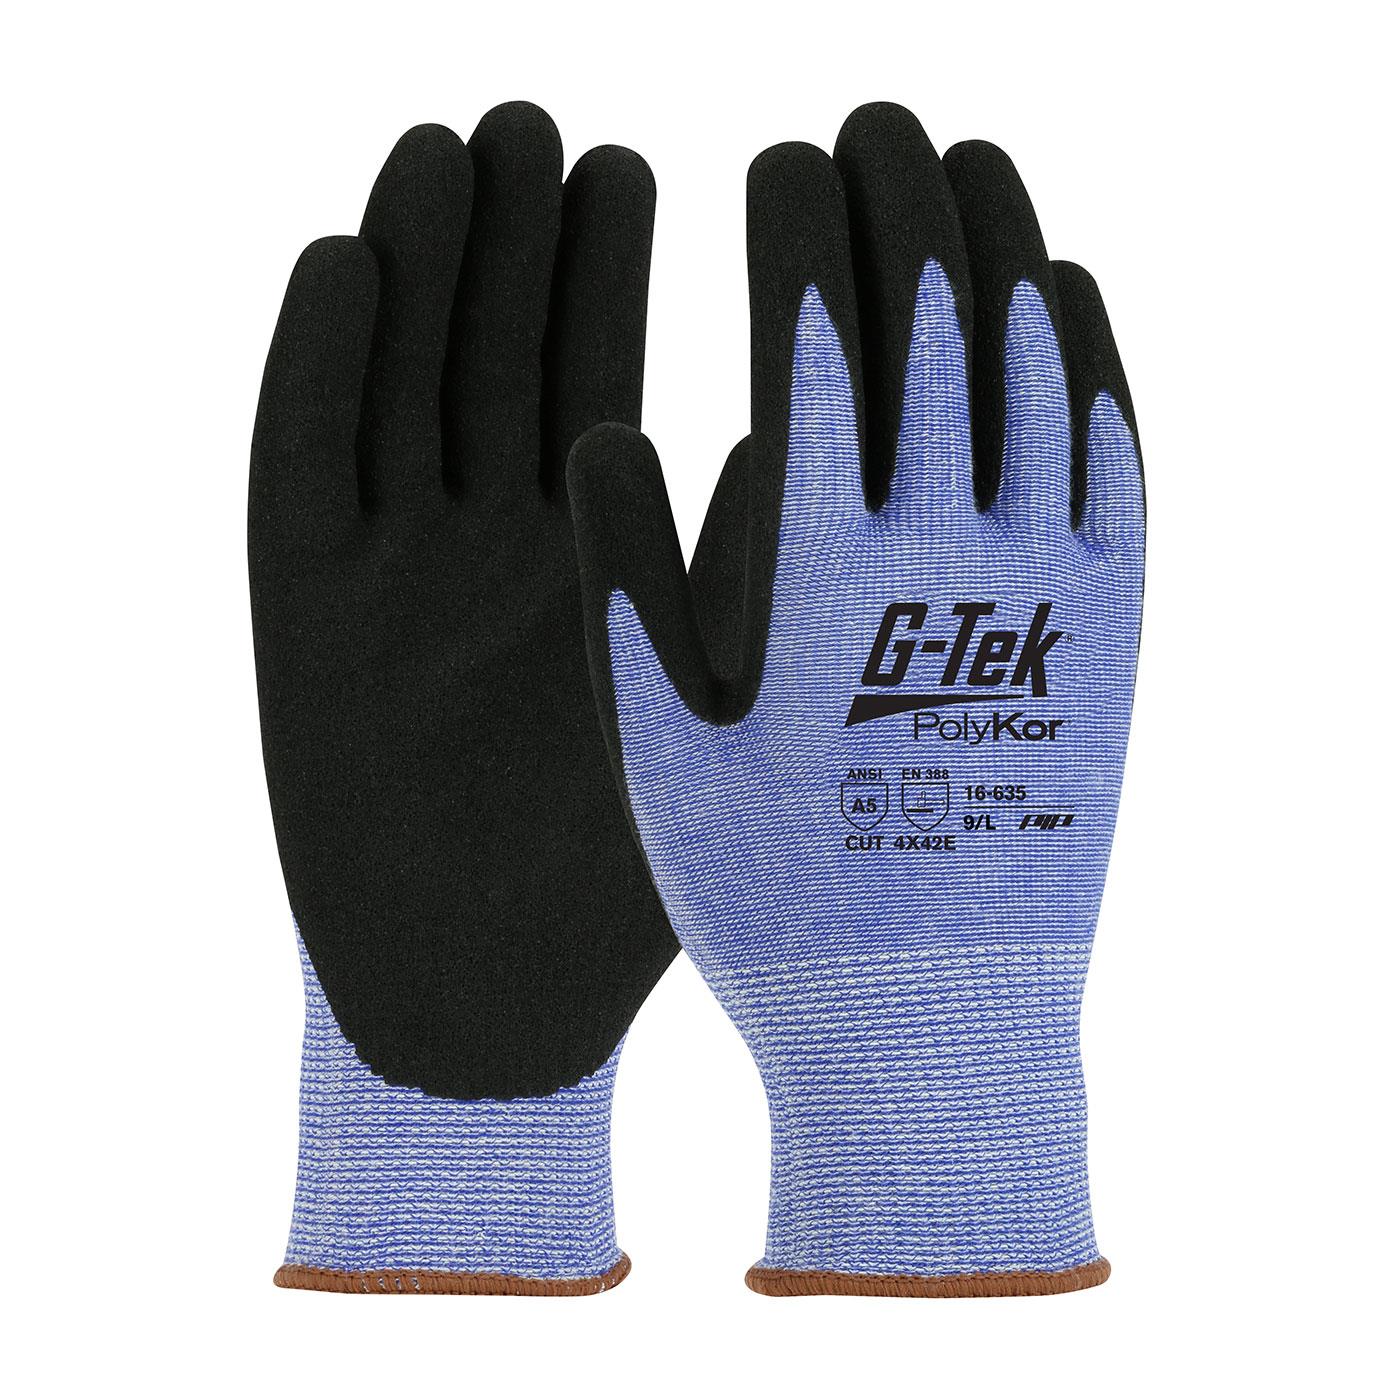 G-TEK POLYKOR 16-635 MICROSURFACE PALM - Cut Resistant Gloves